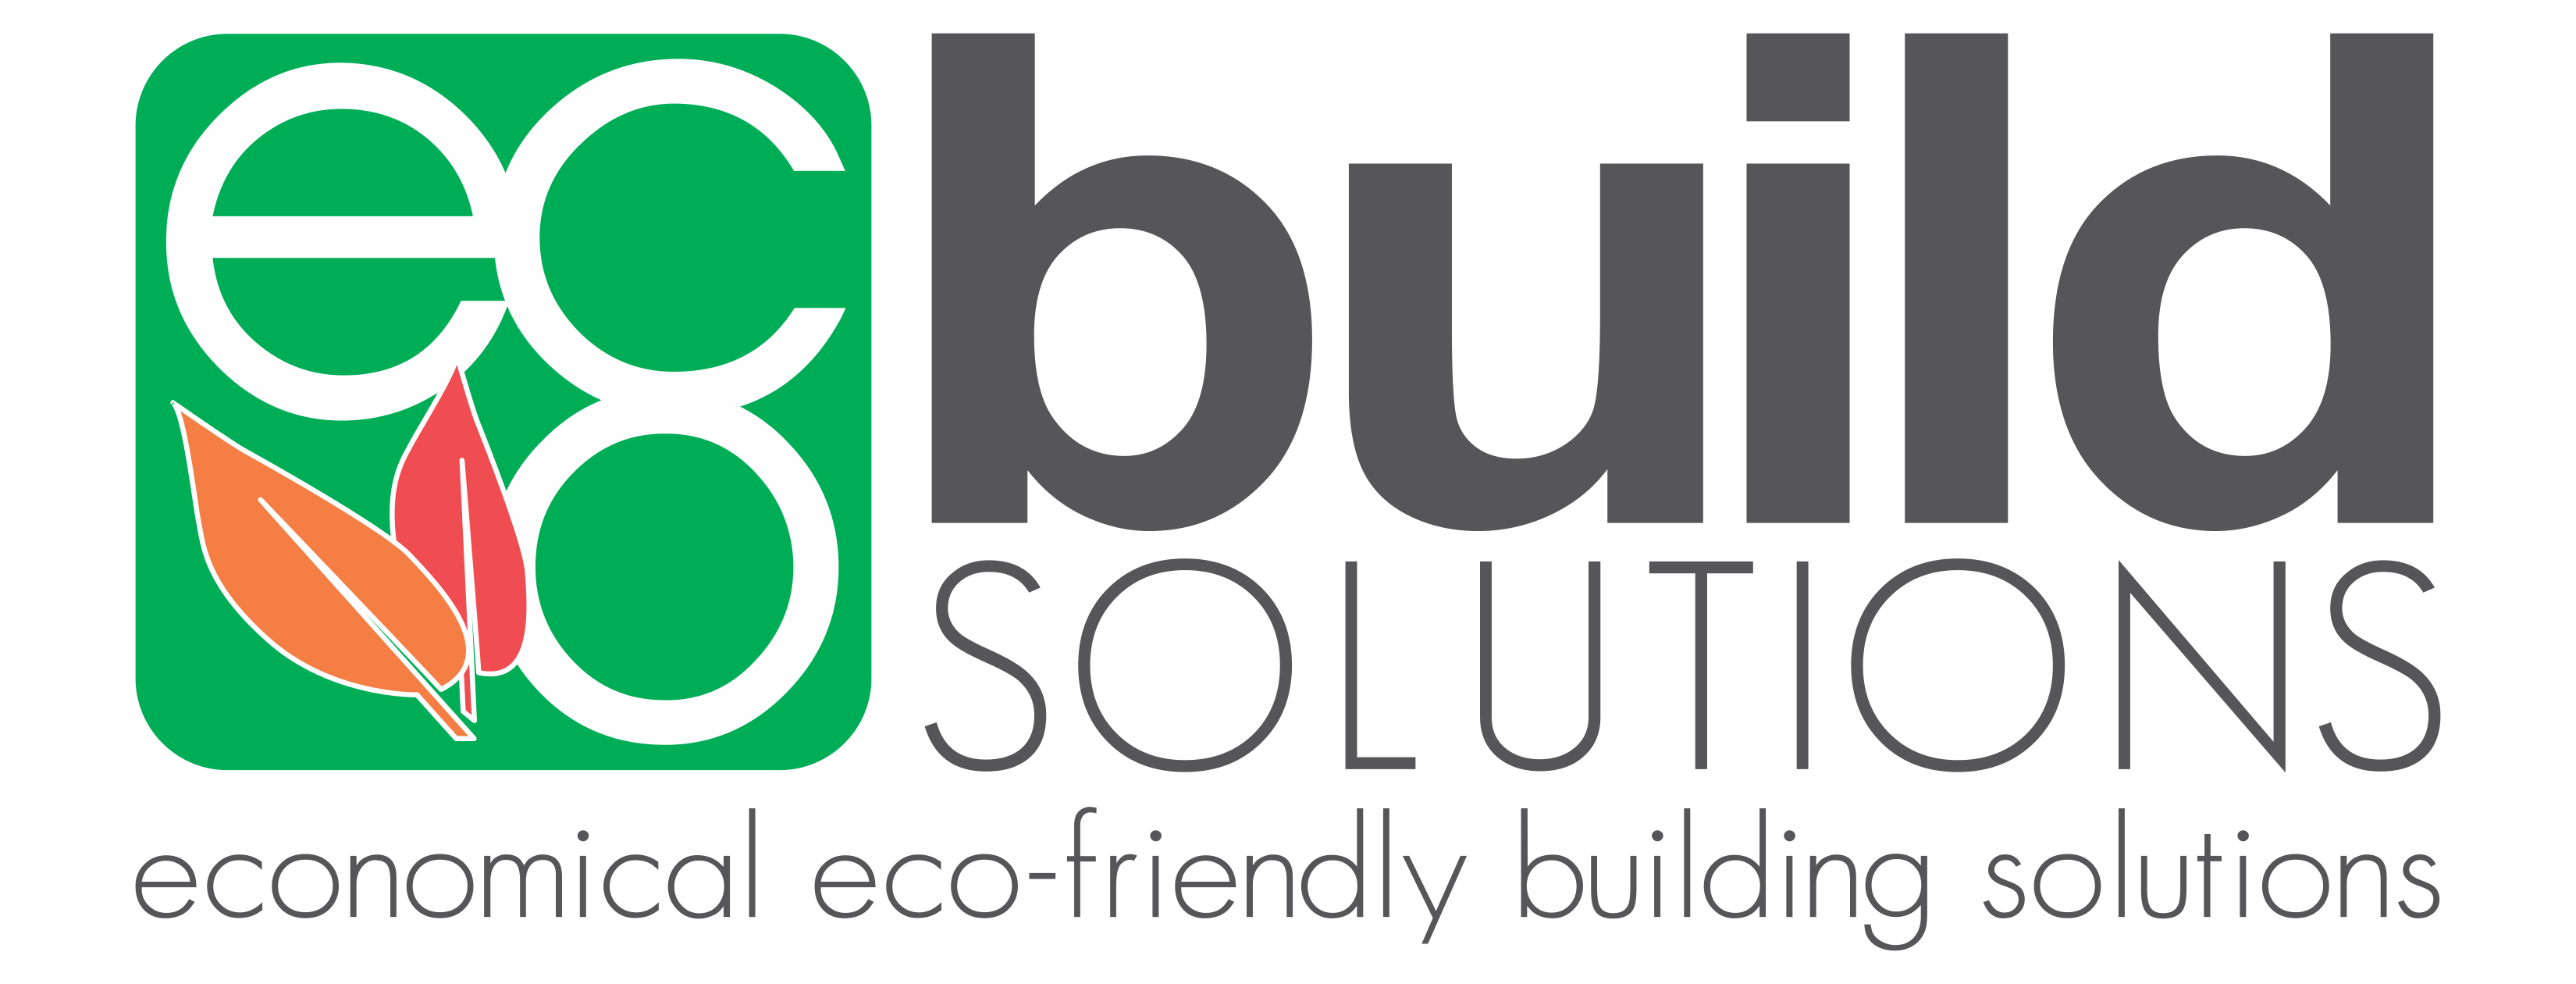 Original.ecobuild solutions logo